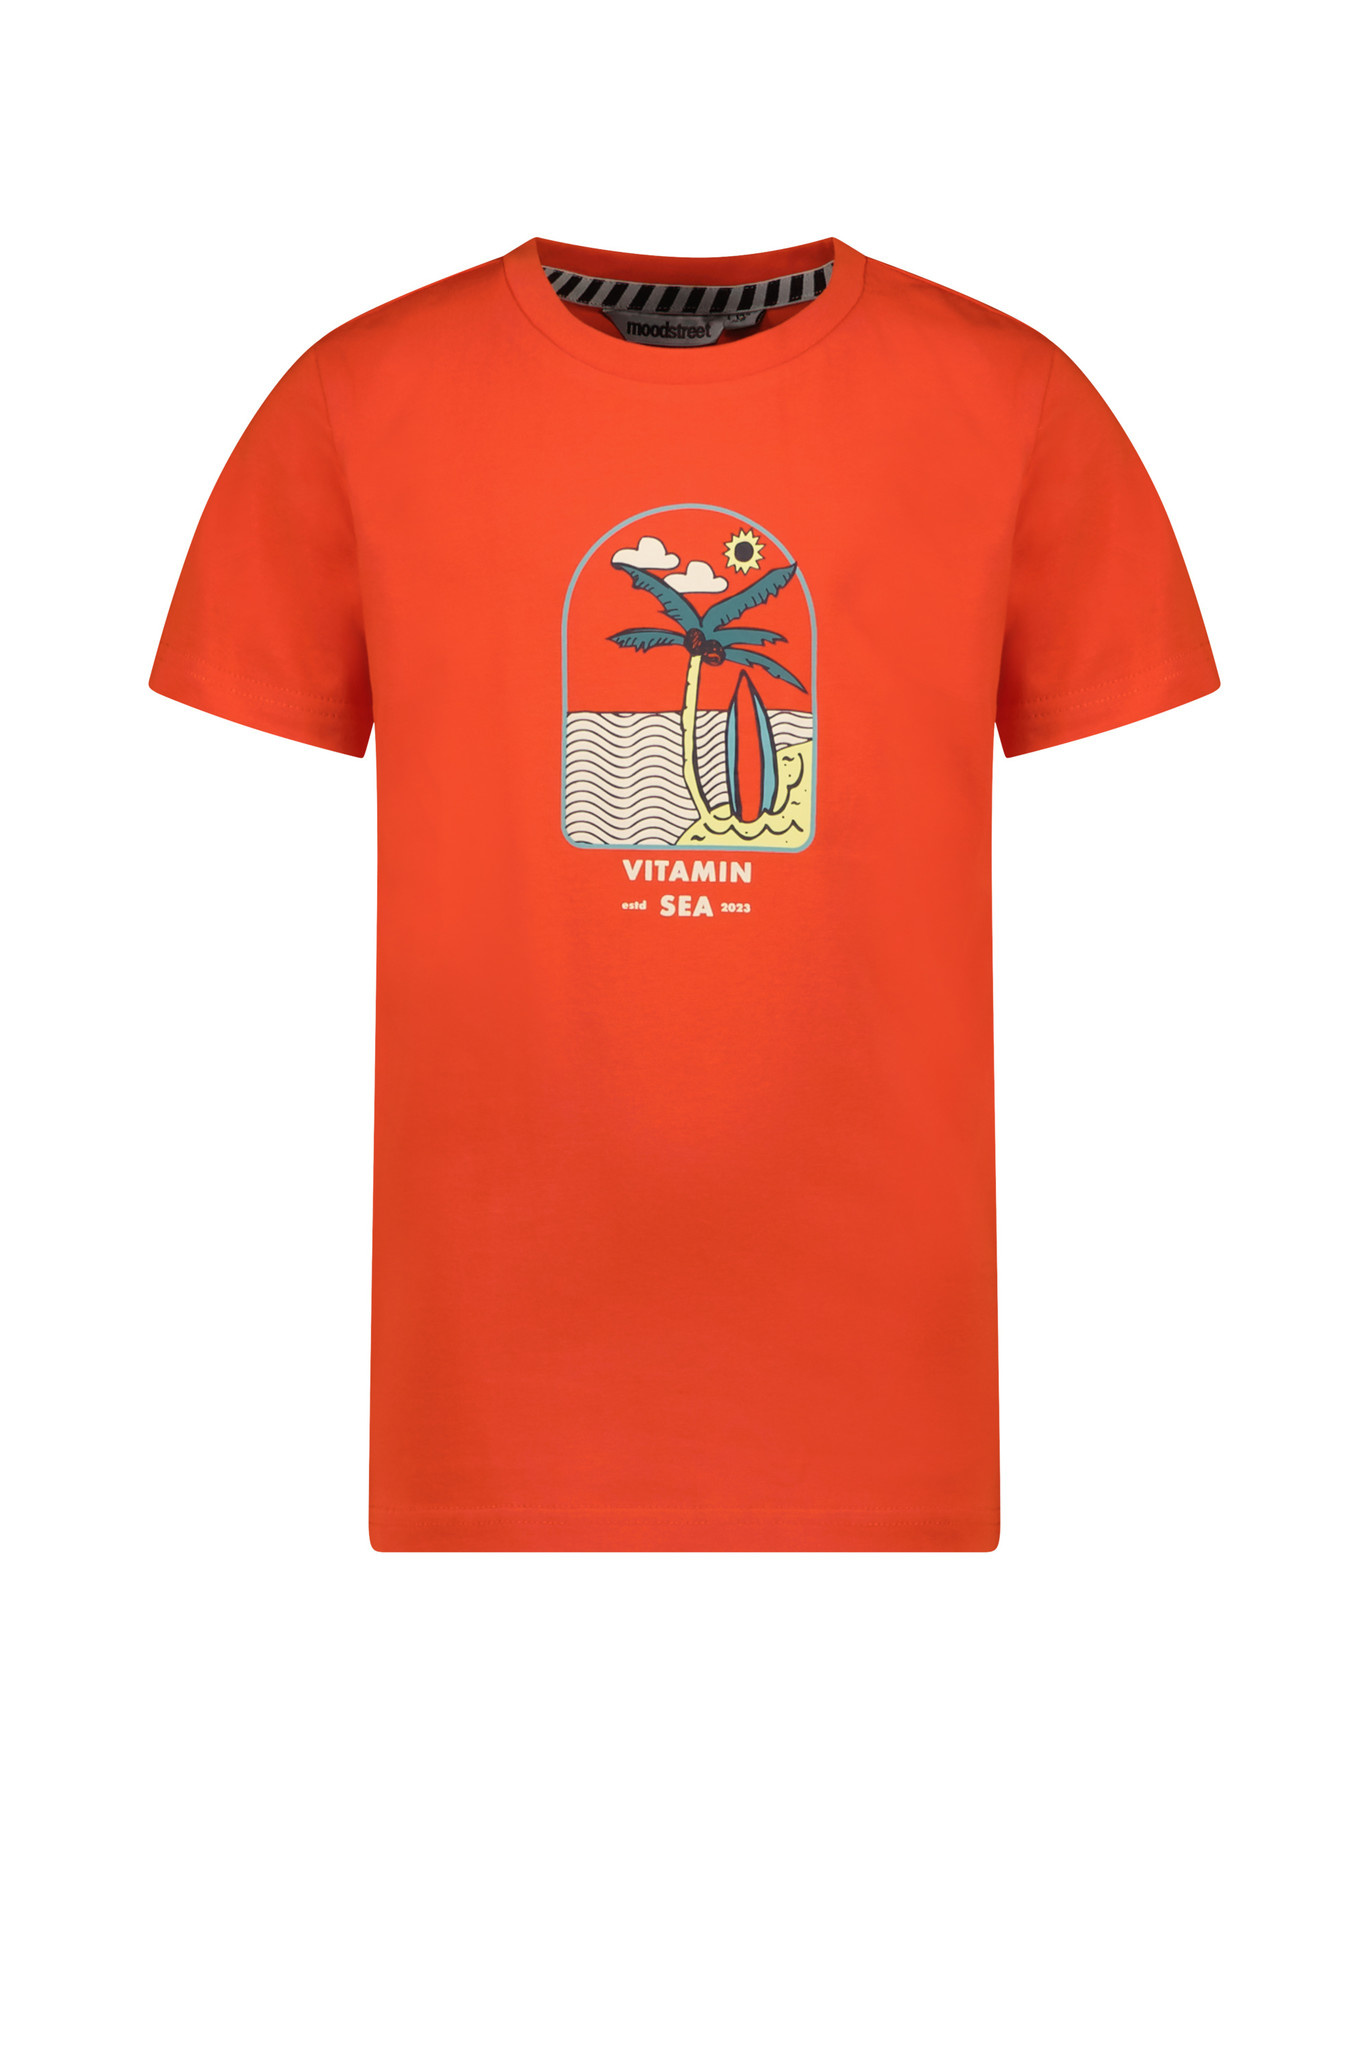 Moodstreet M303-6420 Jongens T-shirt Sporty orange - Maat 110/116